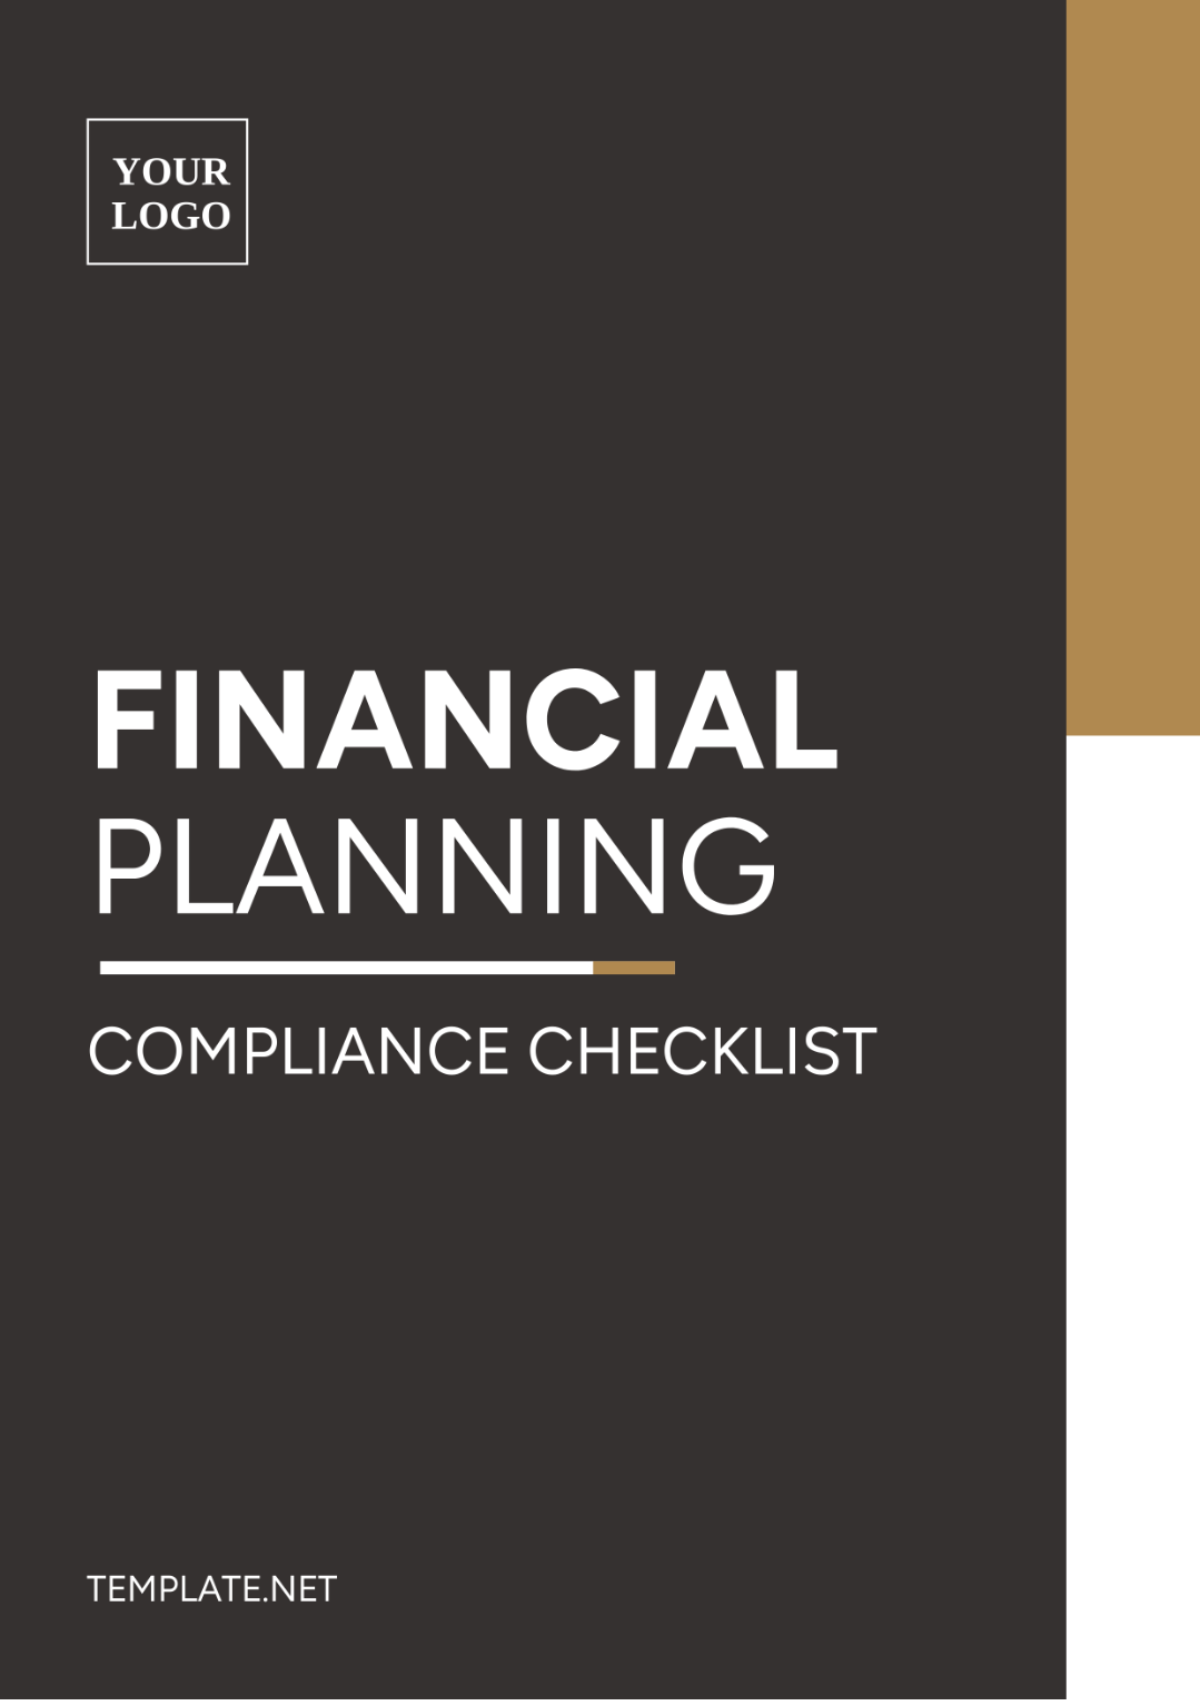 Financial Planning Compliance Checklist Template